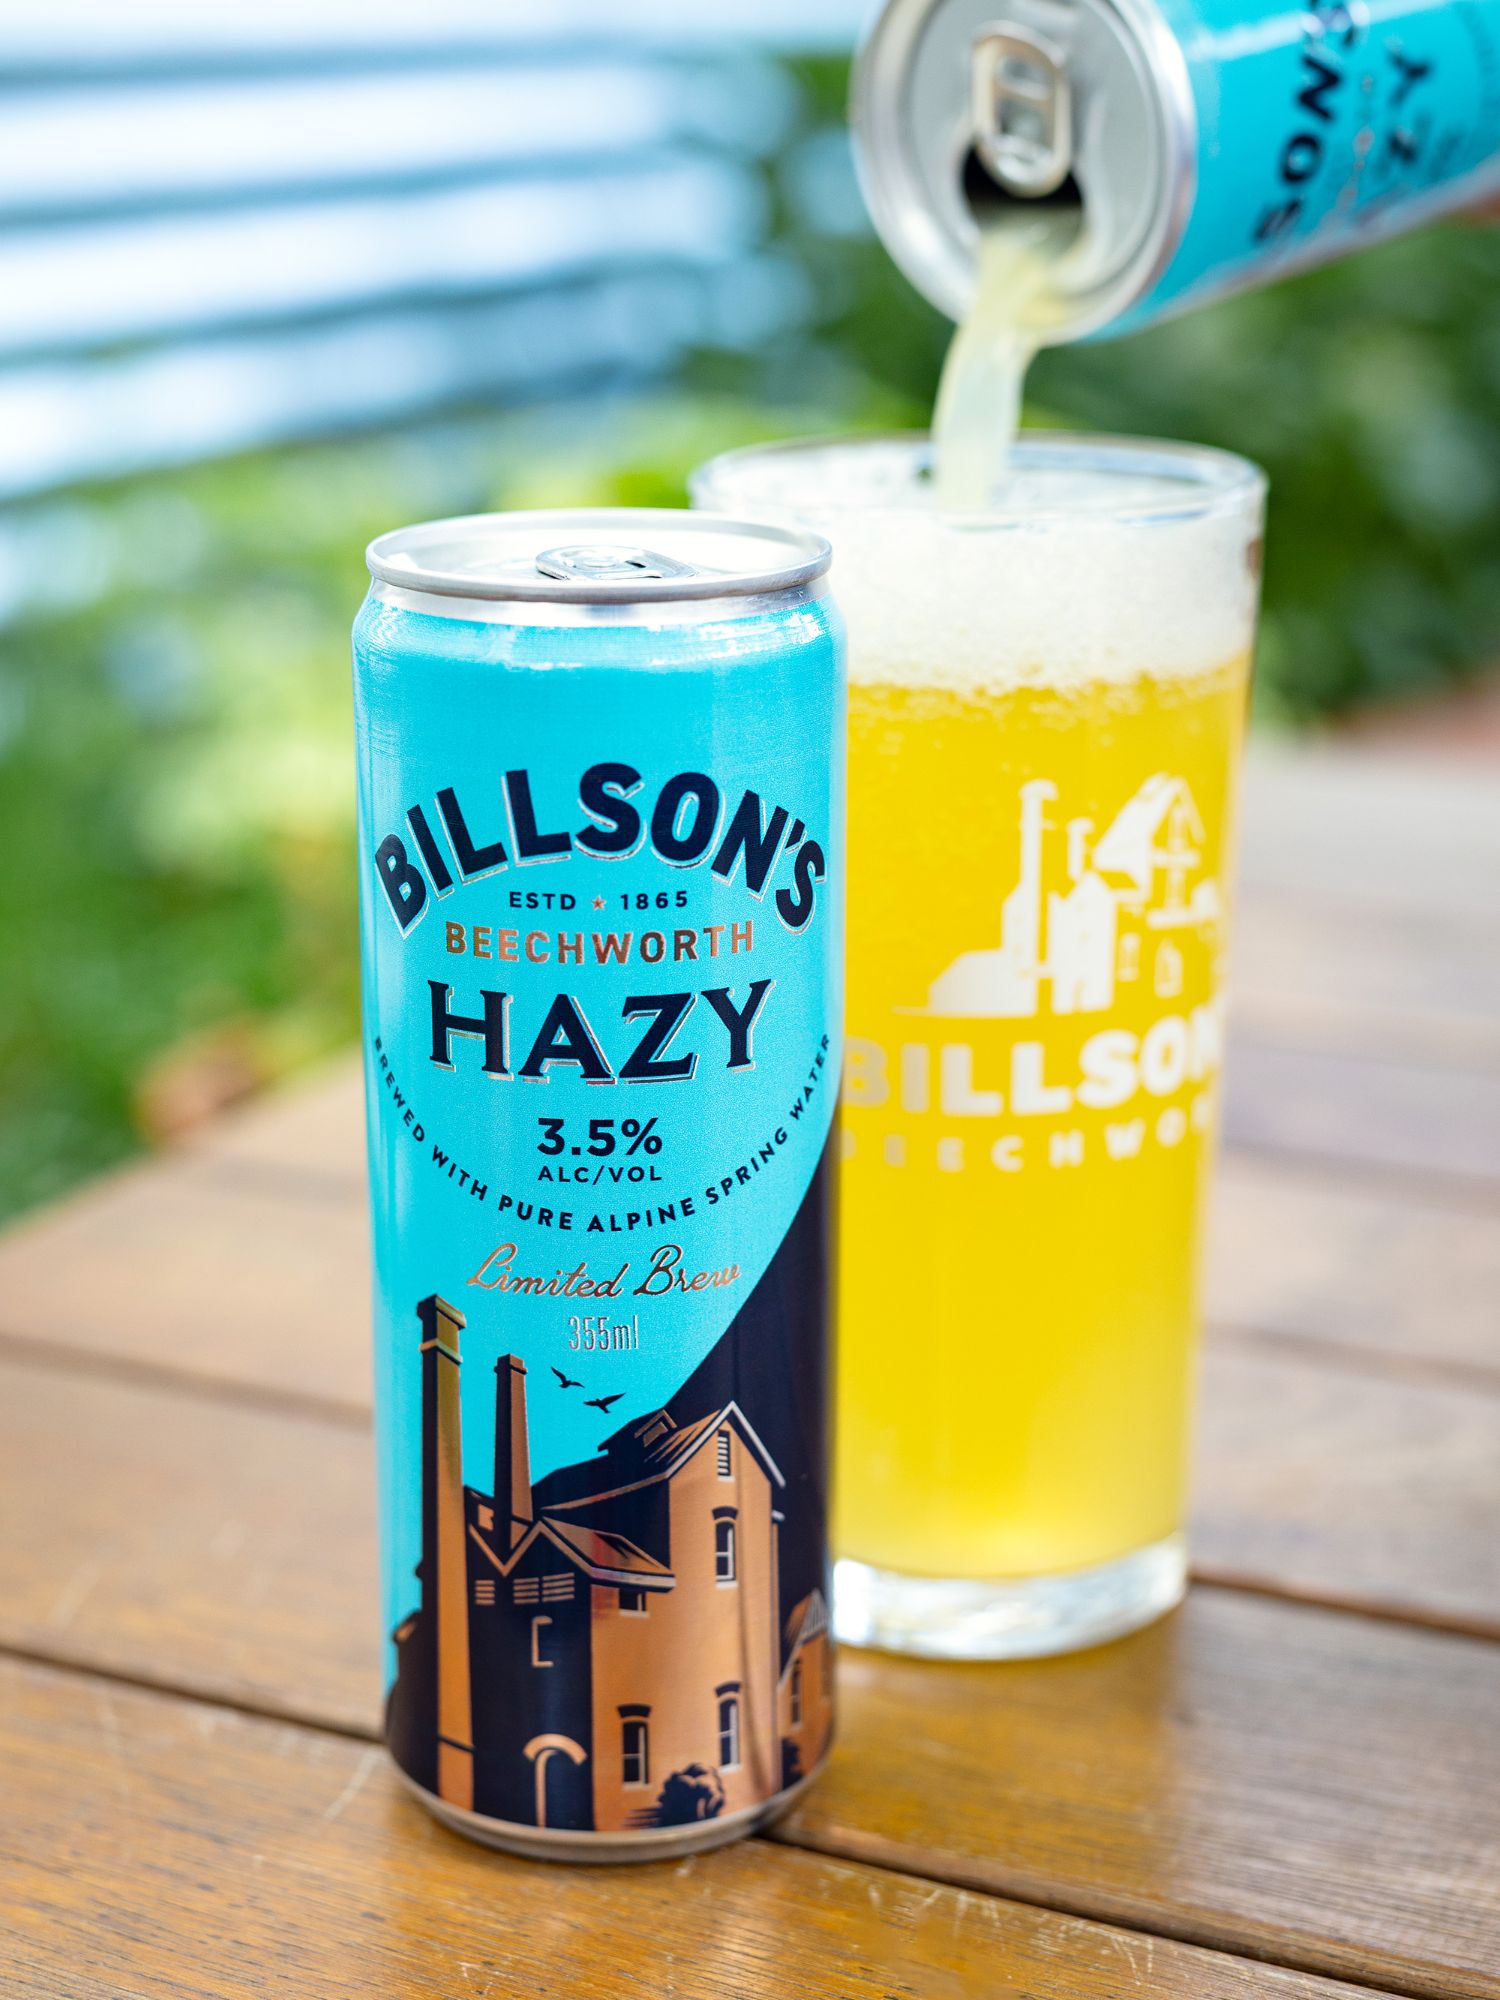 Billson's Easy Hazy Beer Lifestyle